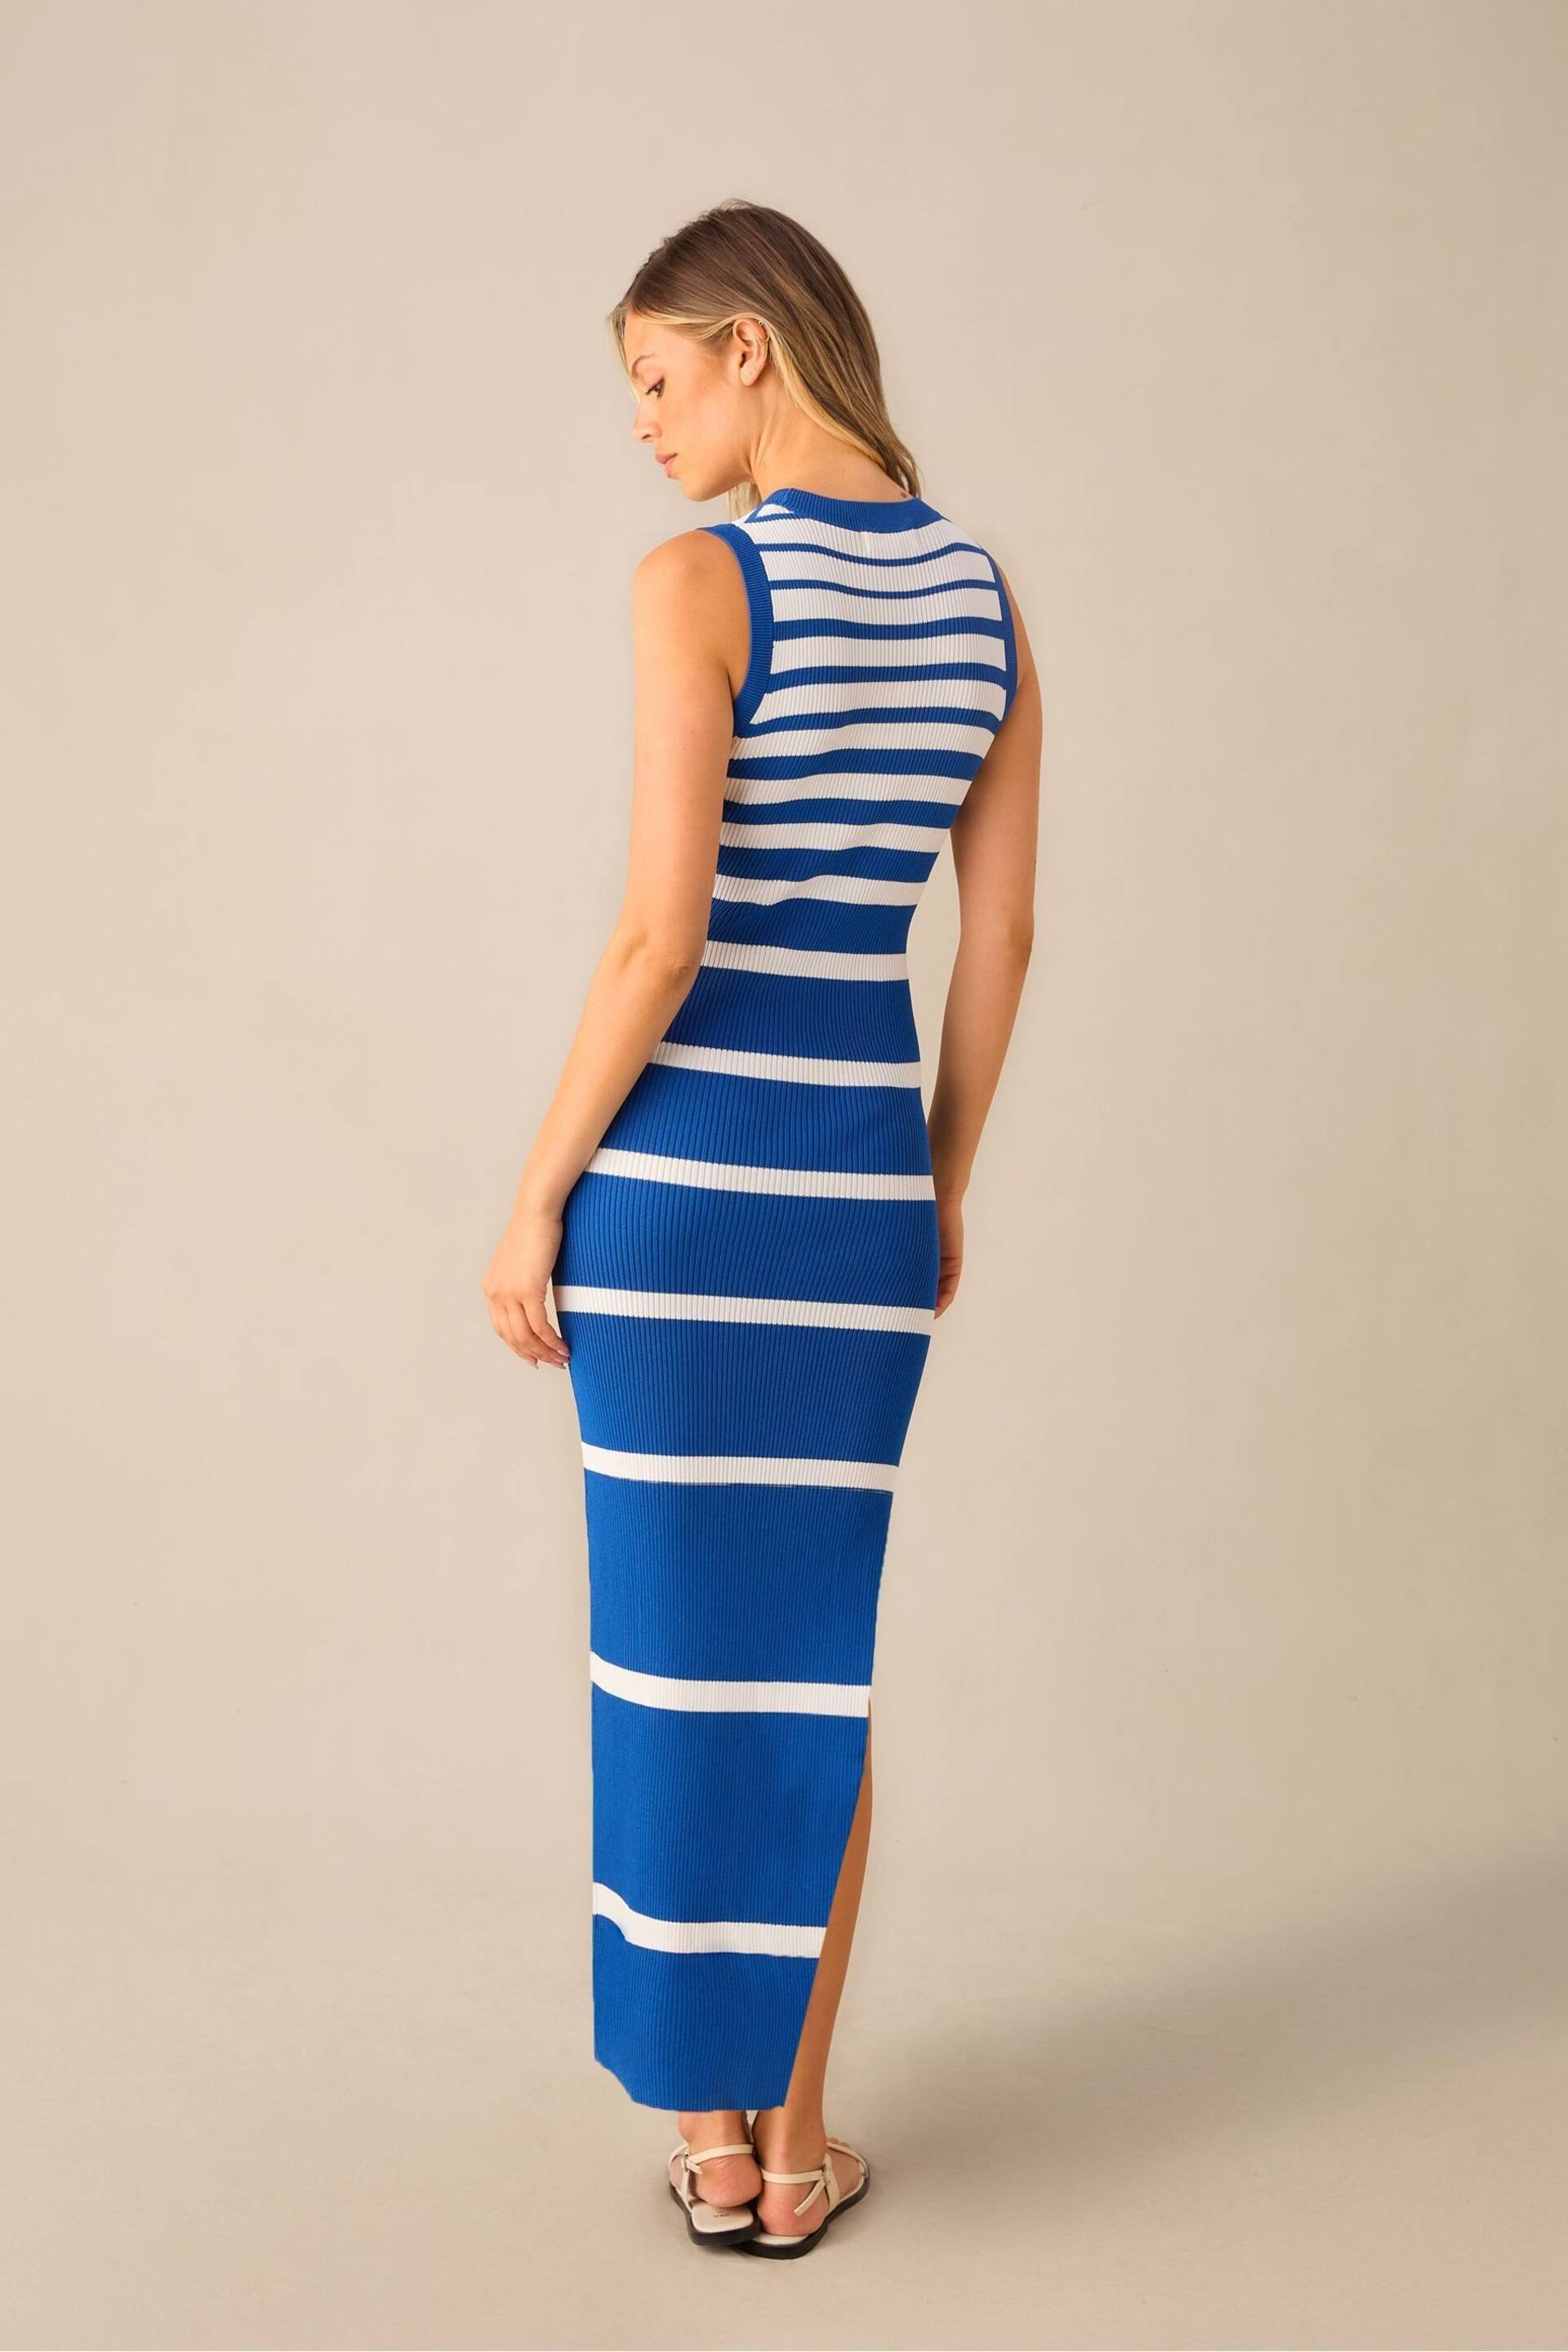 Ro&Zo Blue Stripe Sleeveless Knitted Dress - Image 3 of 5